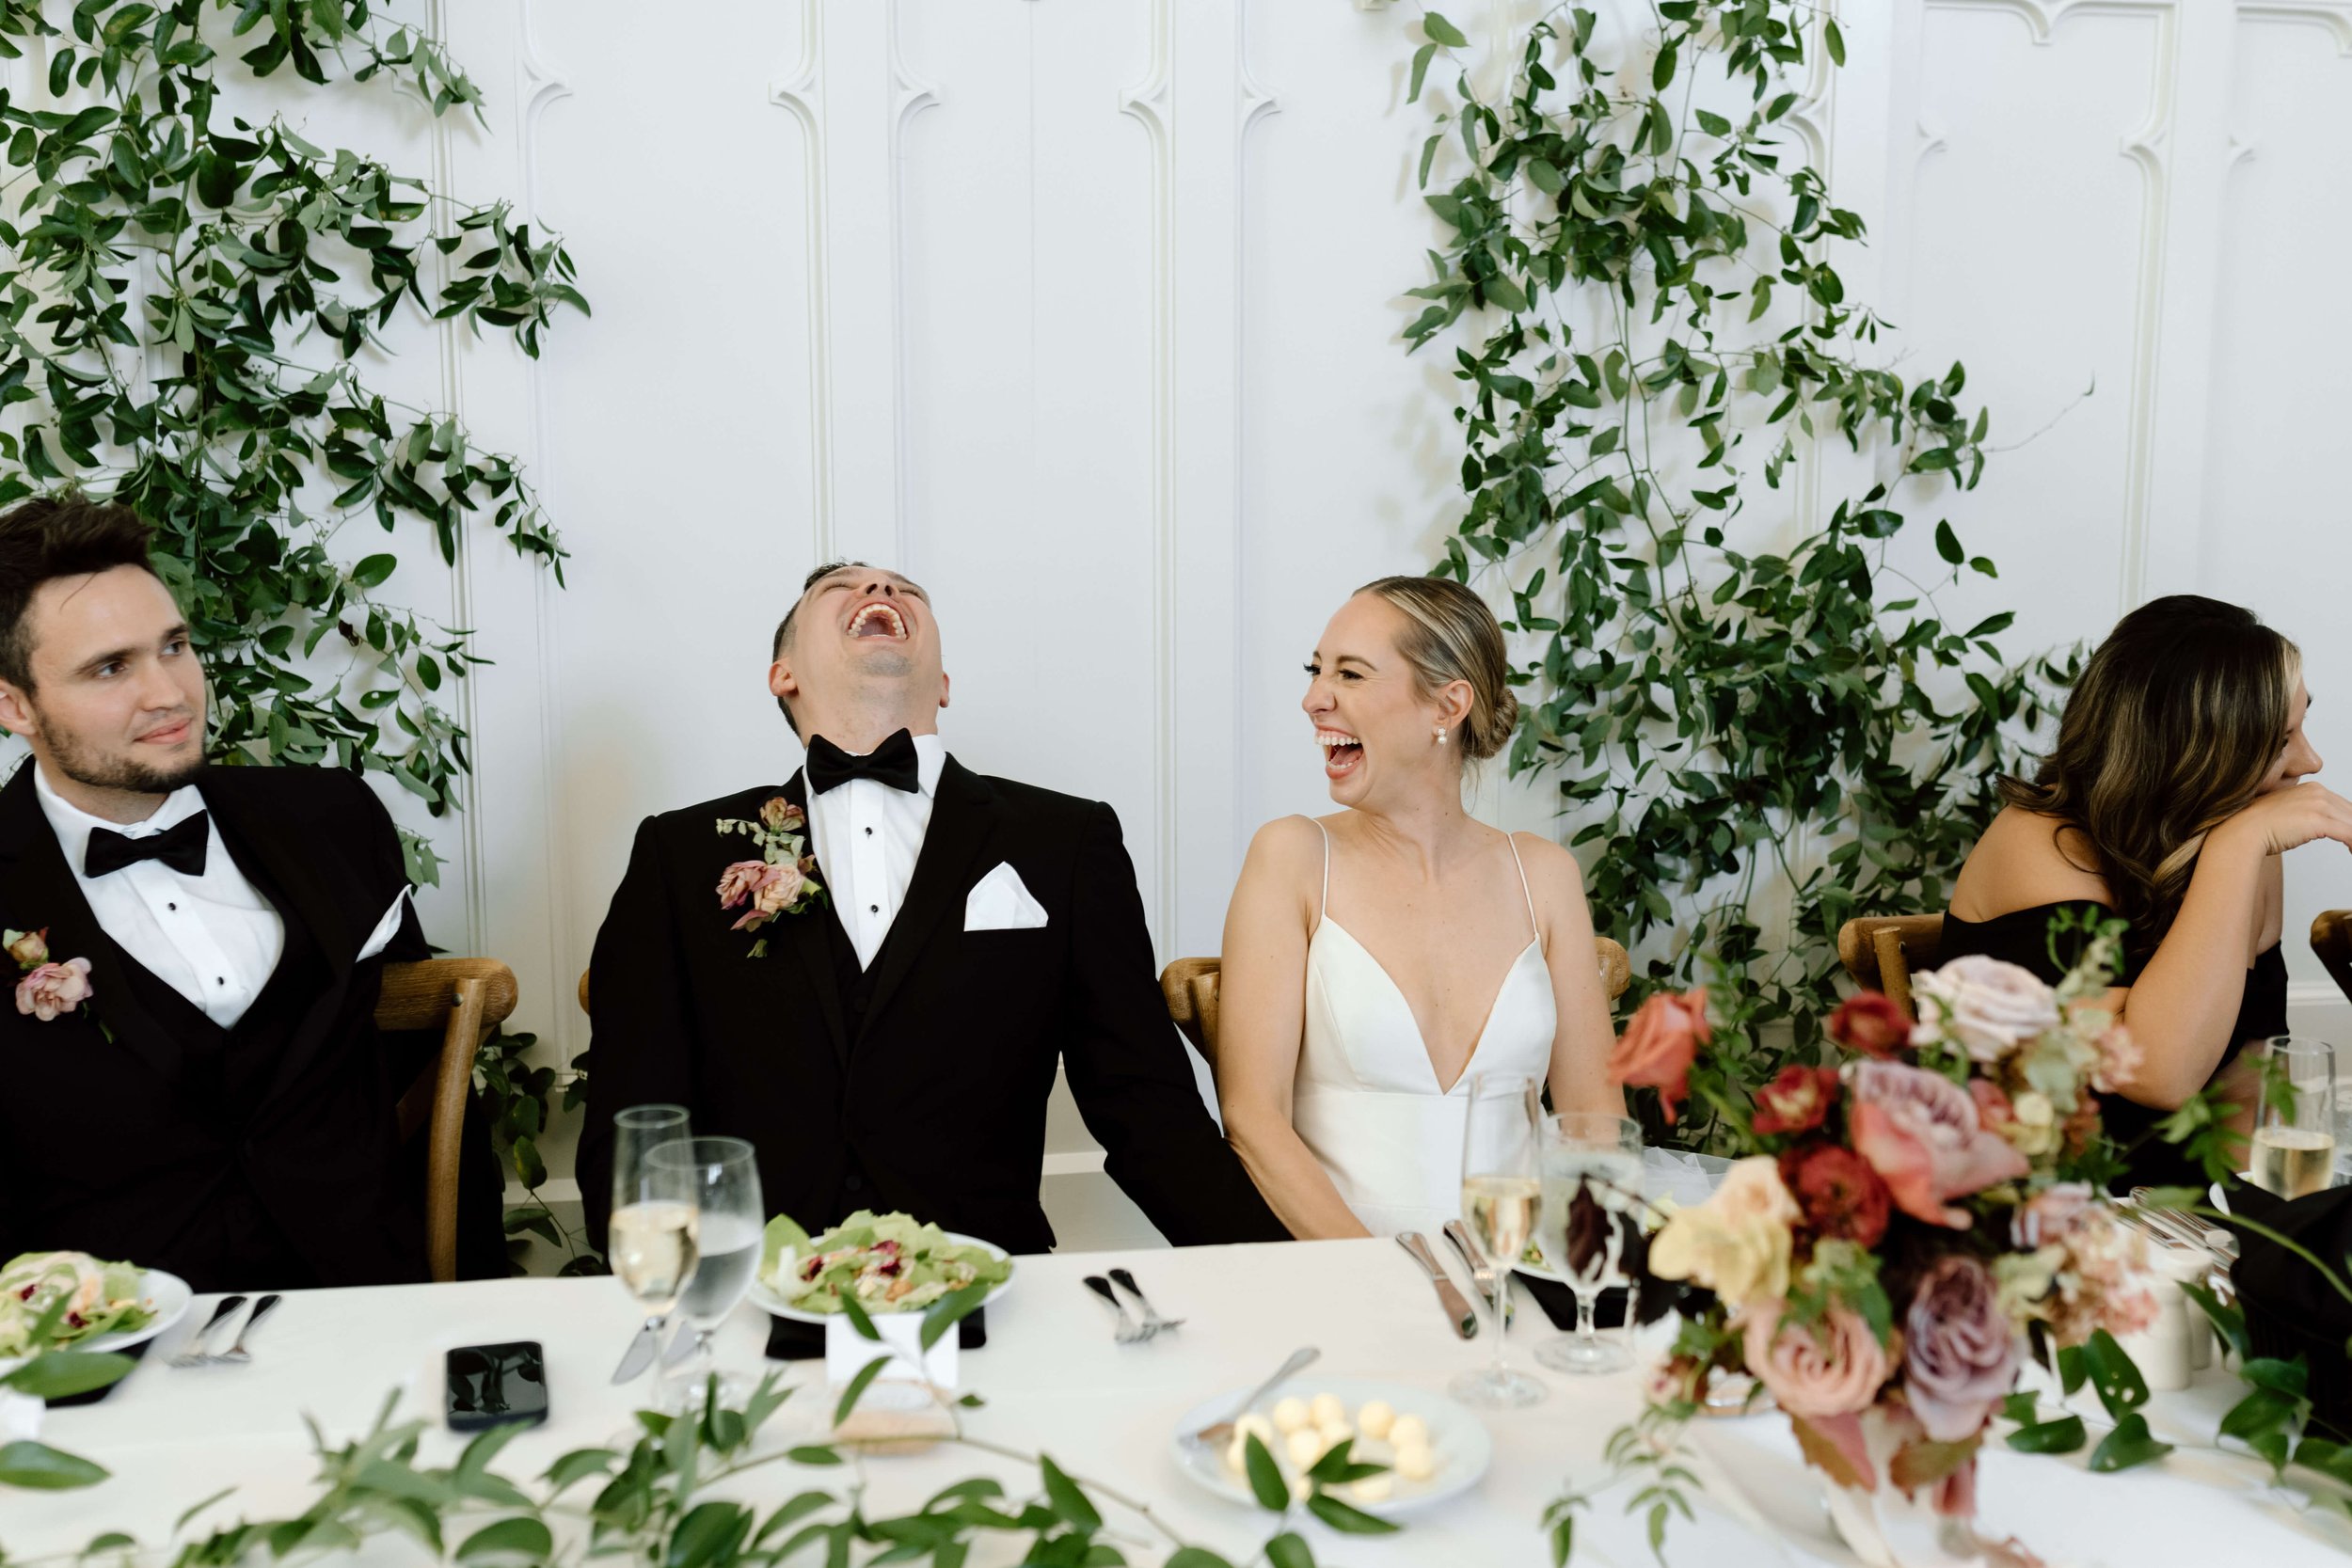 TheOrellanos-PhotographybyAliK-WeddingDay-GrandRapids-BroadwayAvenue-777.jpeg